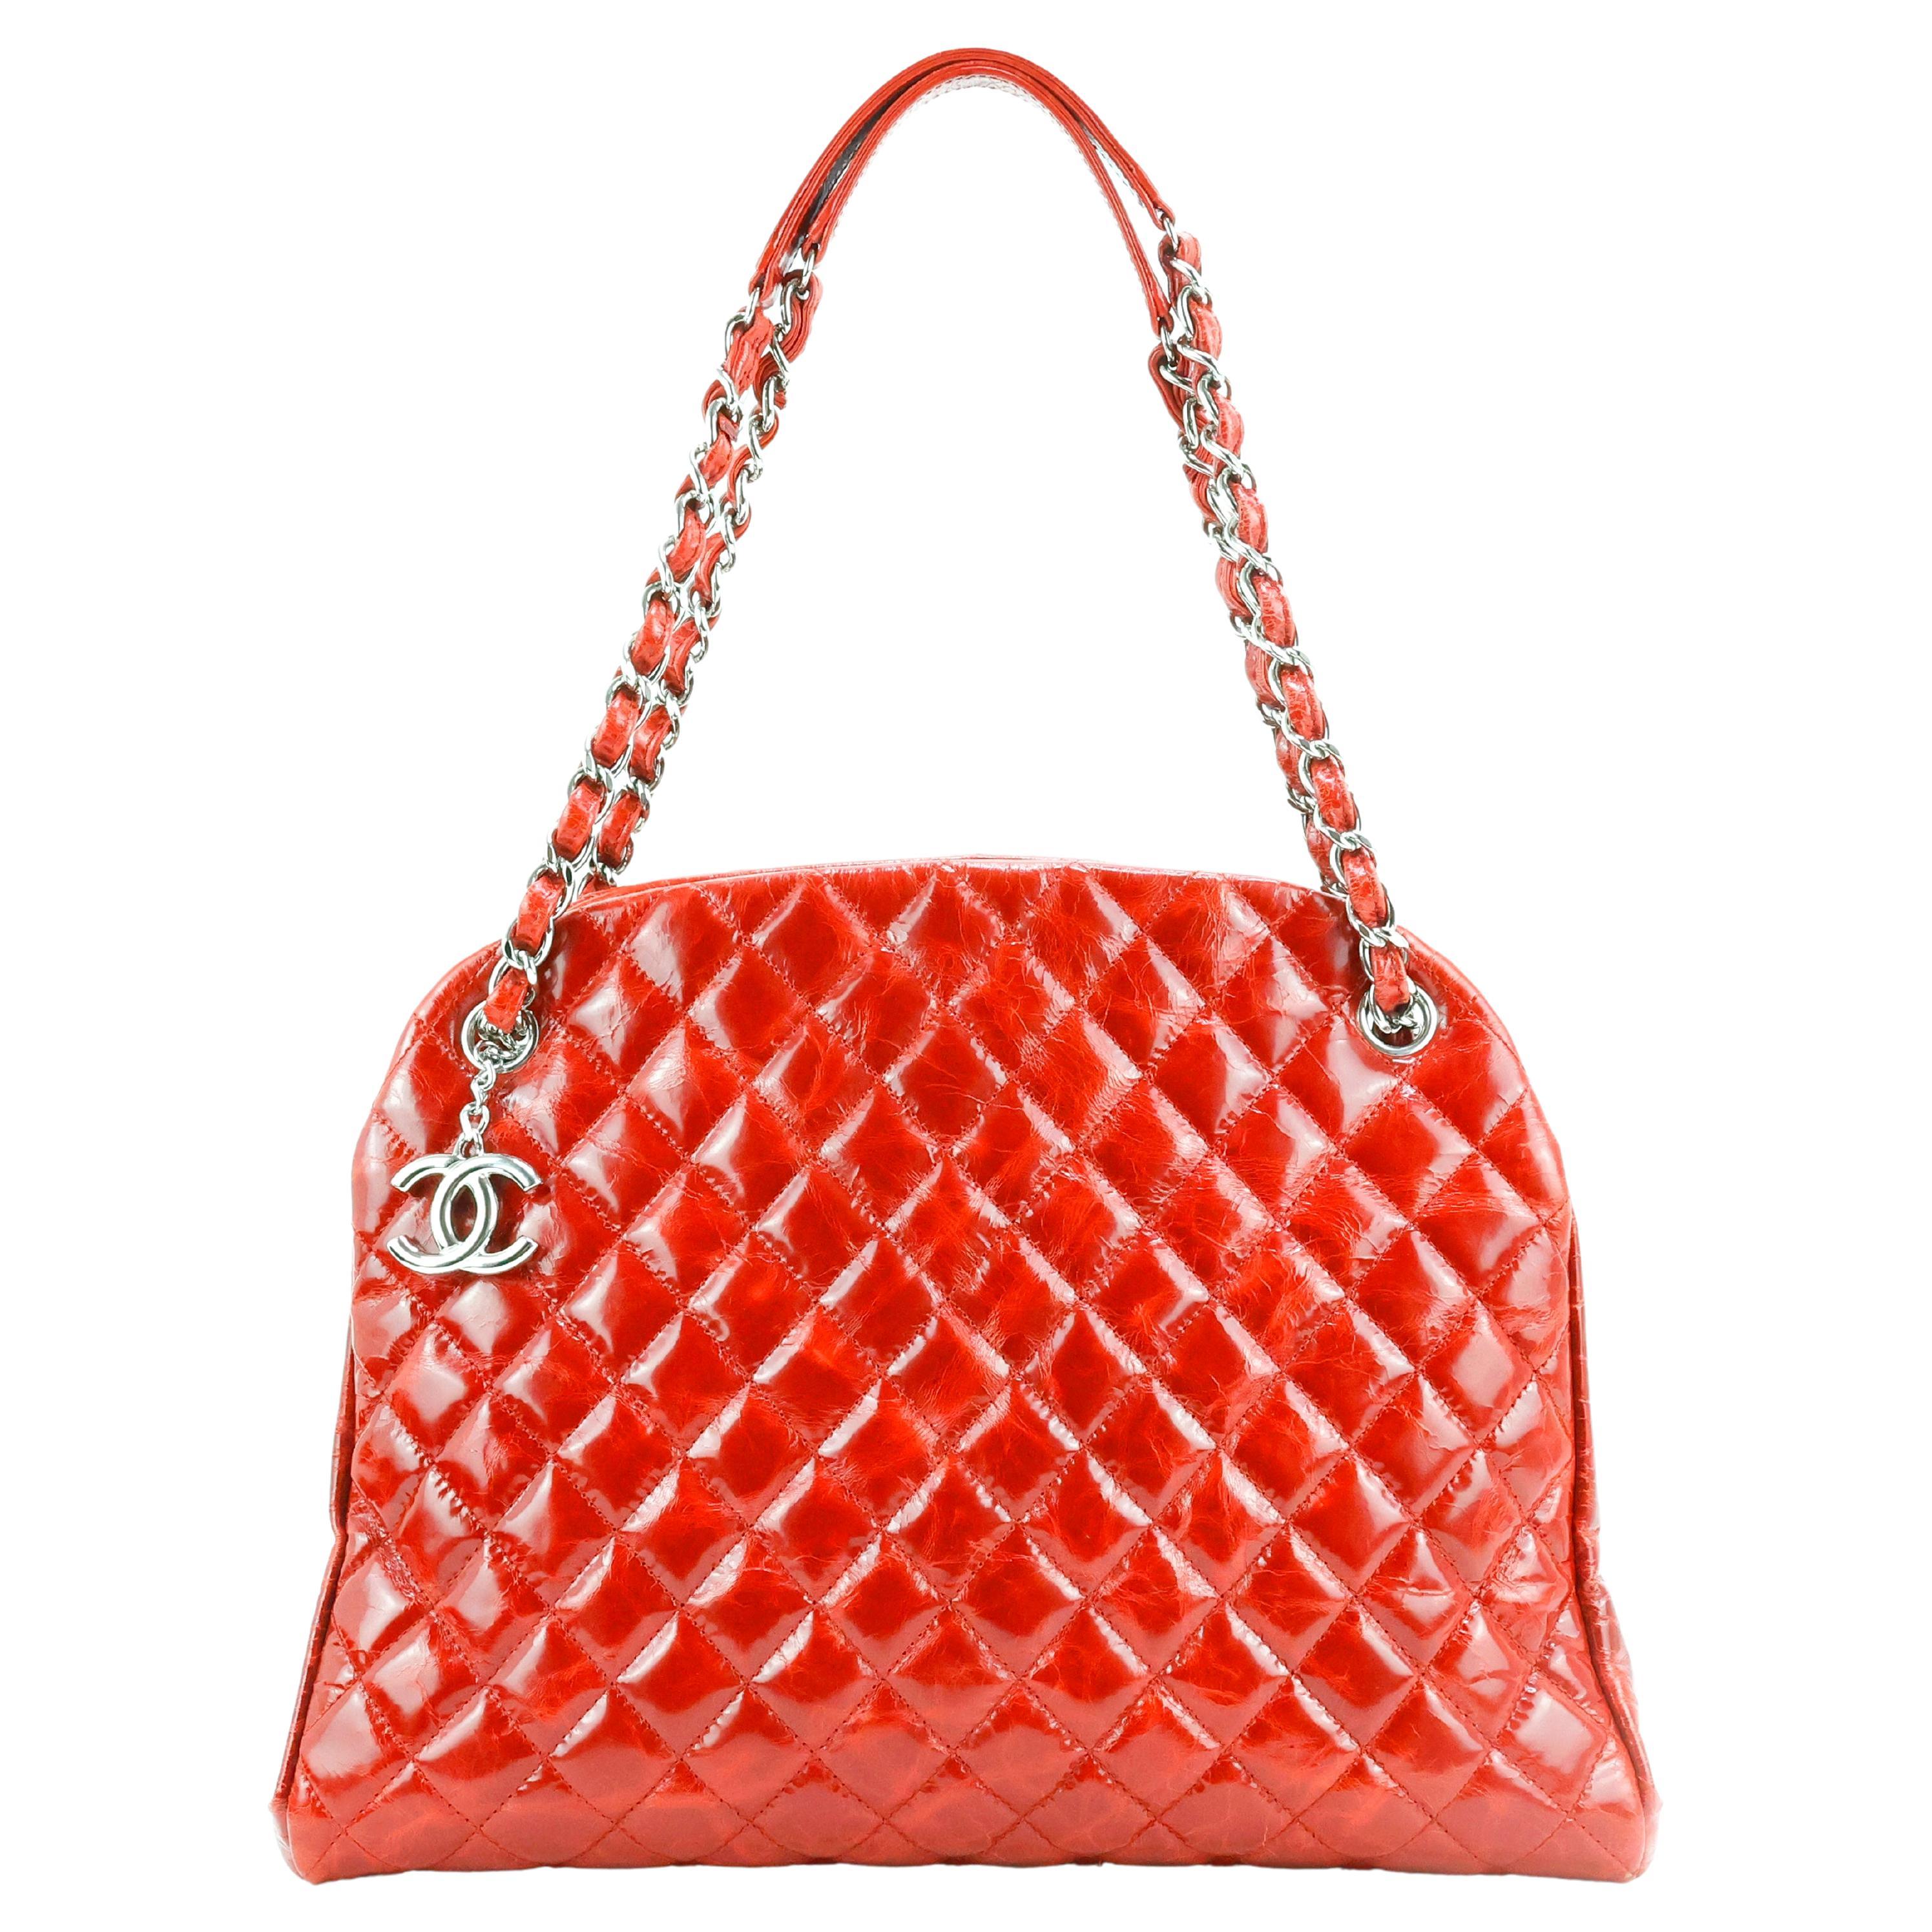 Chanel Mademoiselle Bag - 141 For Sale on 1stDibs